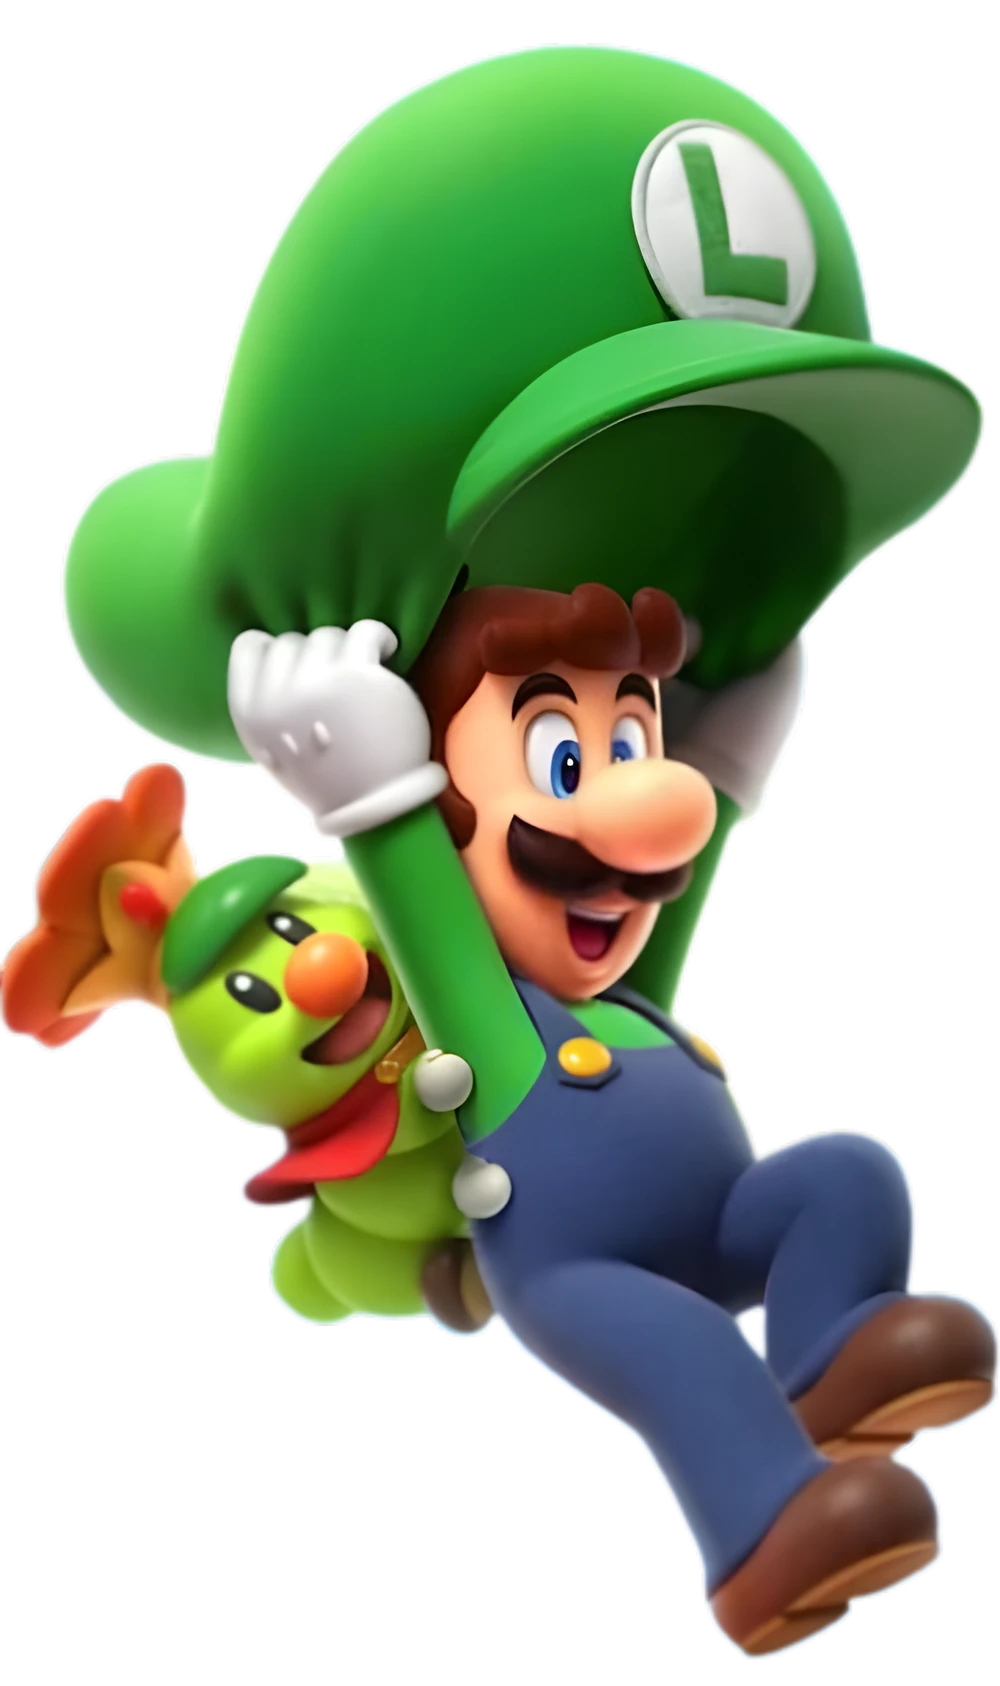 Luigi's Mansion 3 - Wikipedia